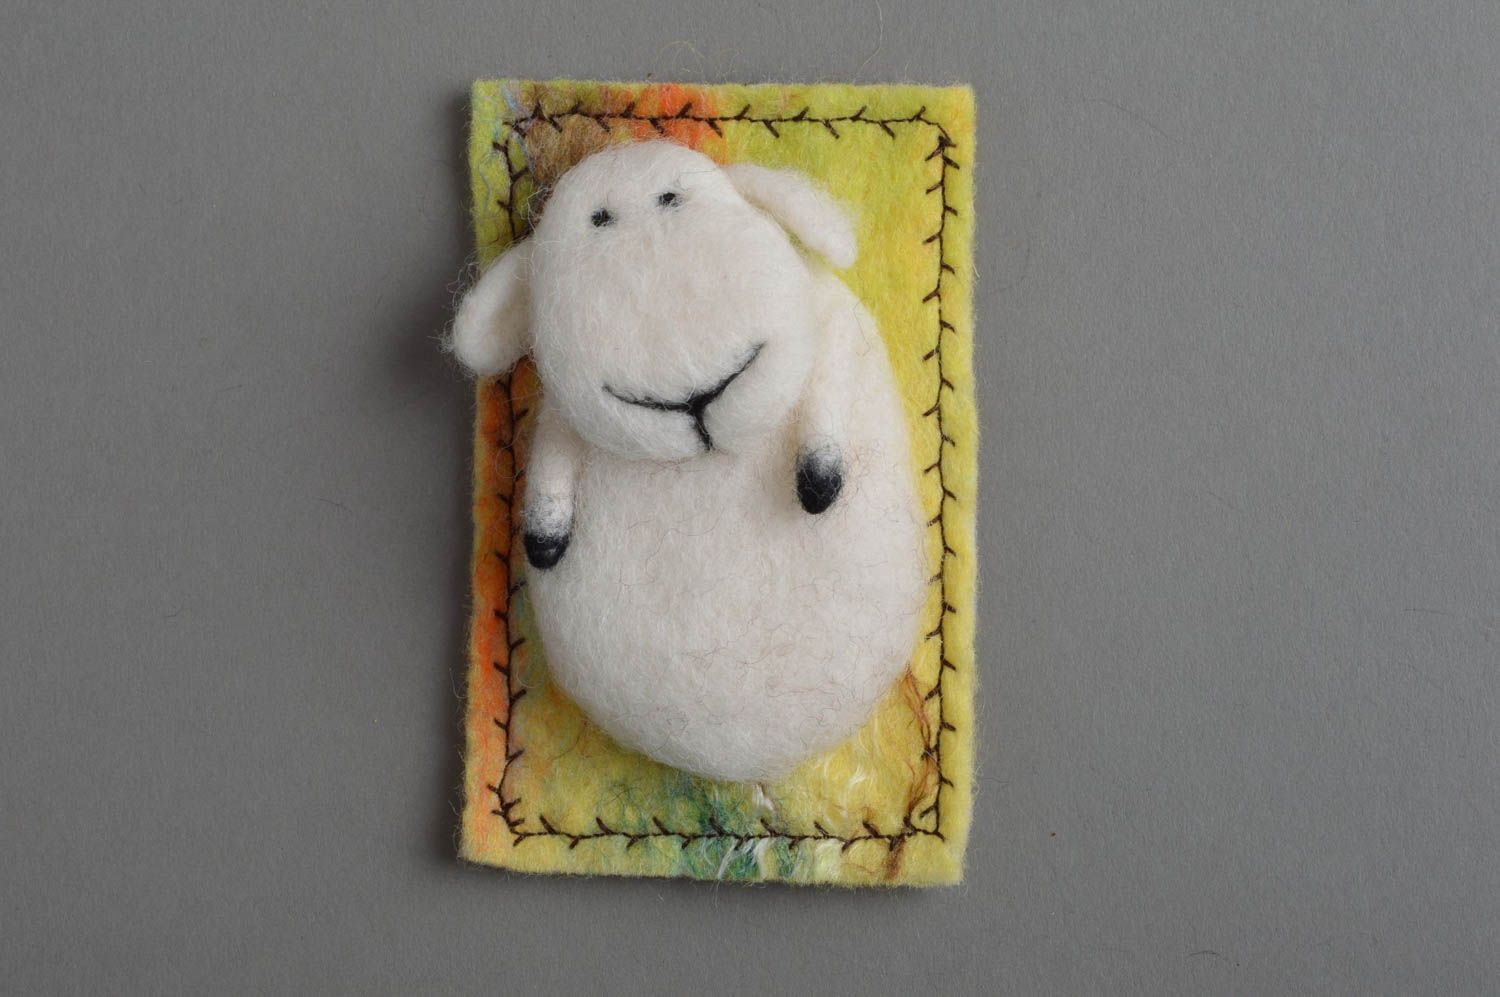 Imán de nevera de lana artesanal elemento decorativo regalo original ovejita foto 3